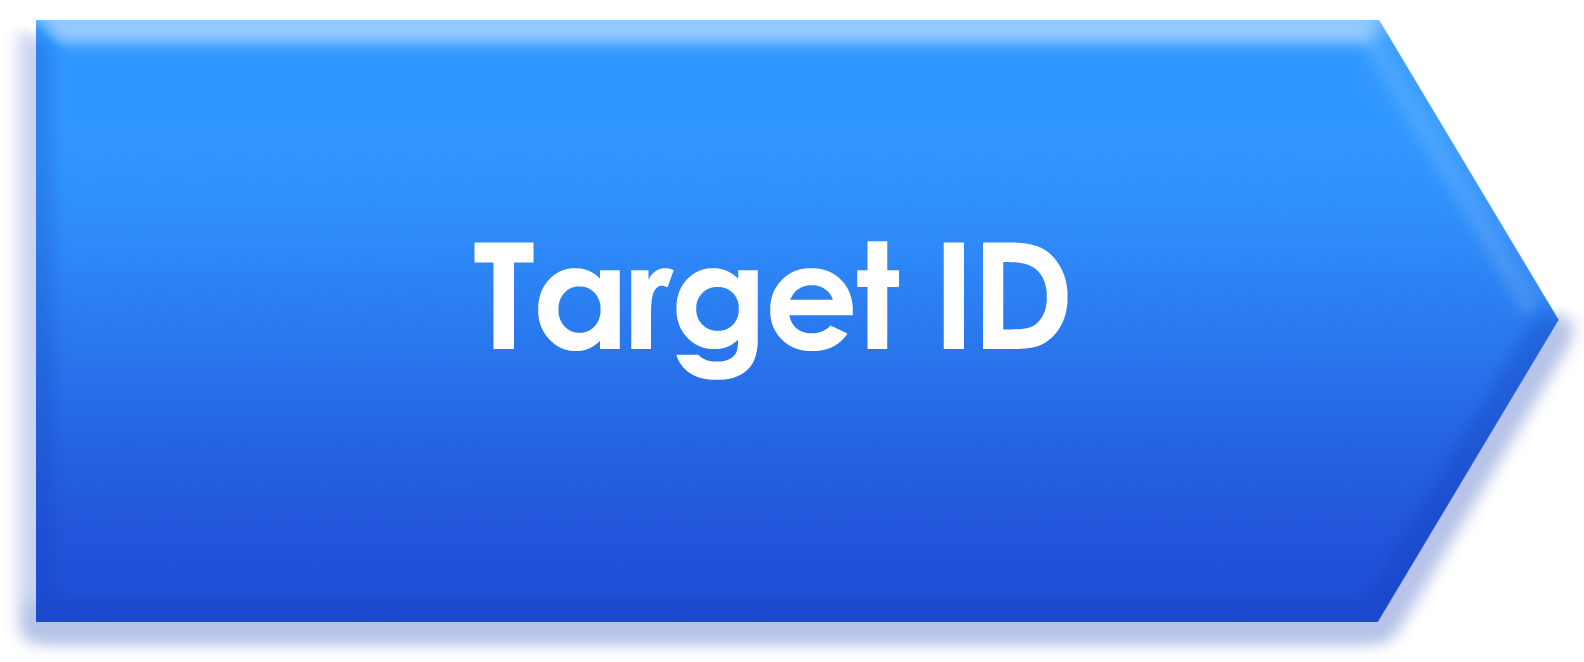 Target ID